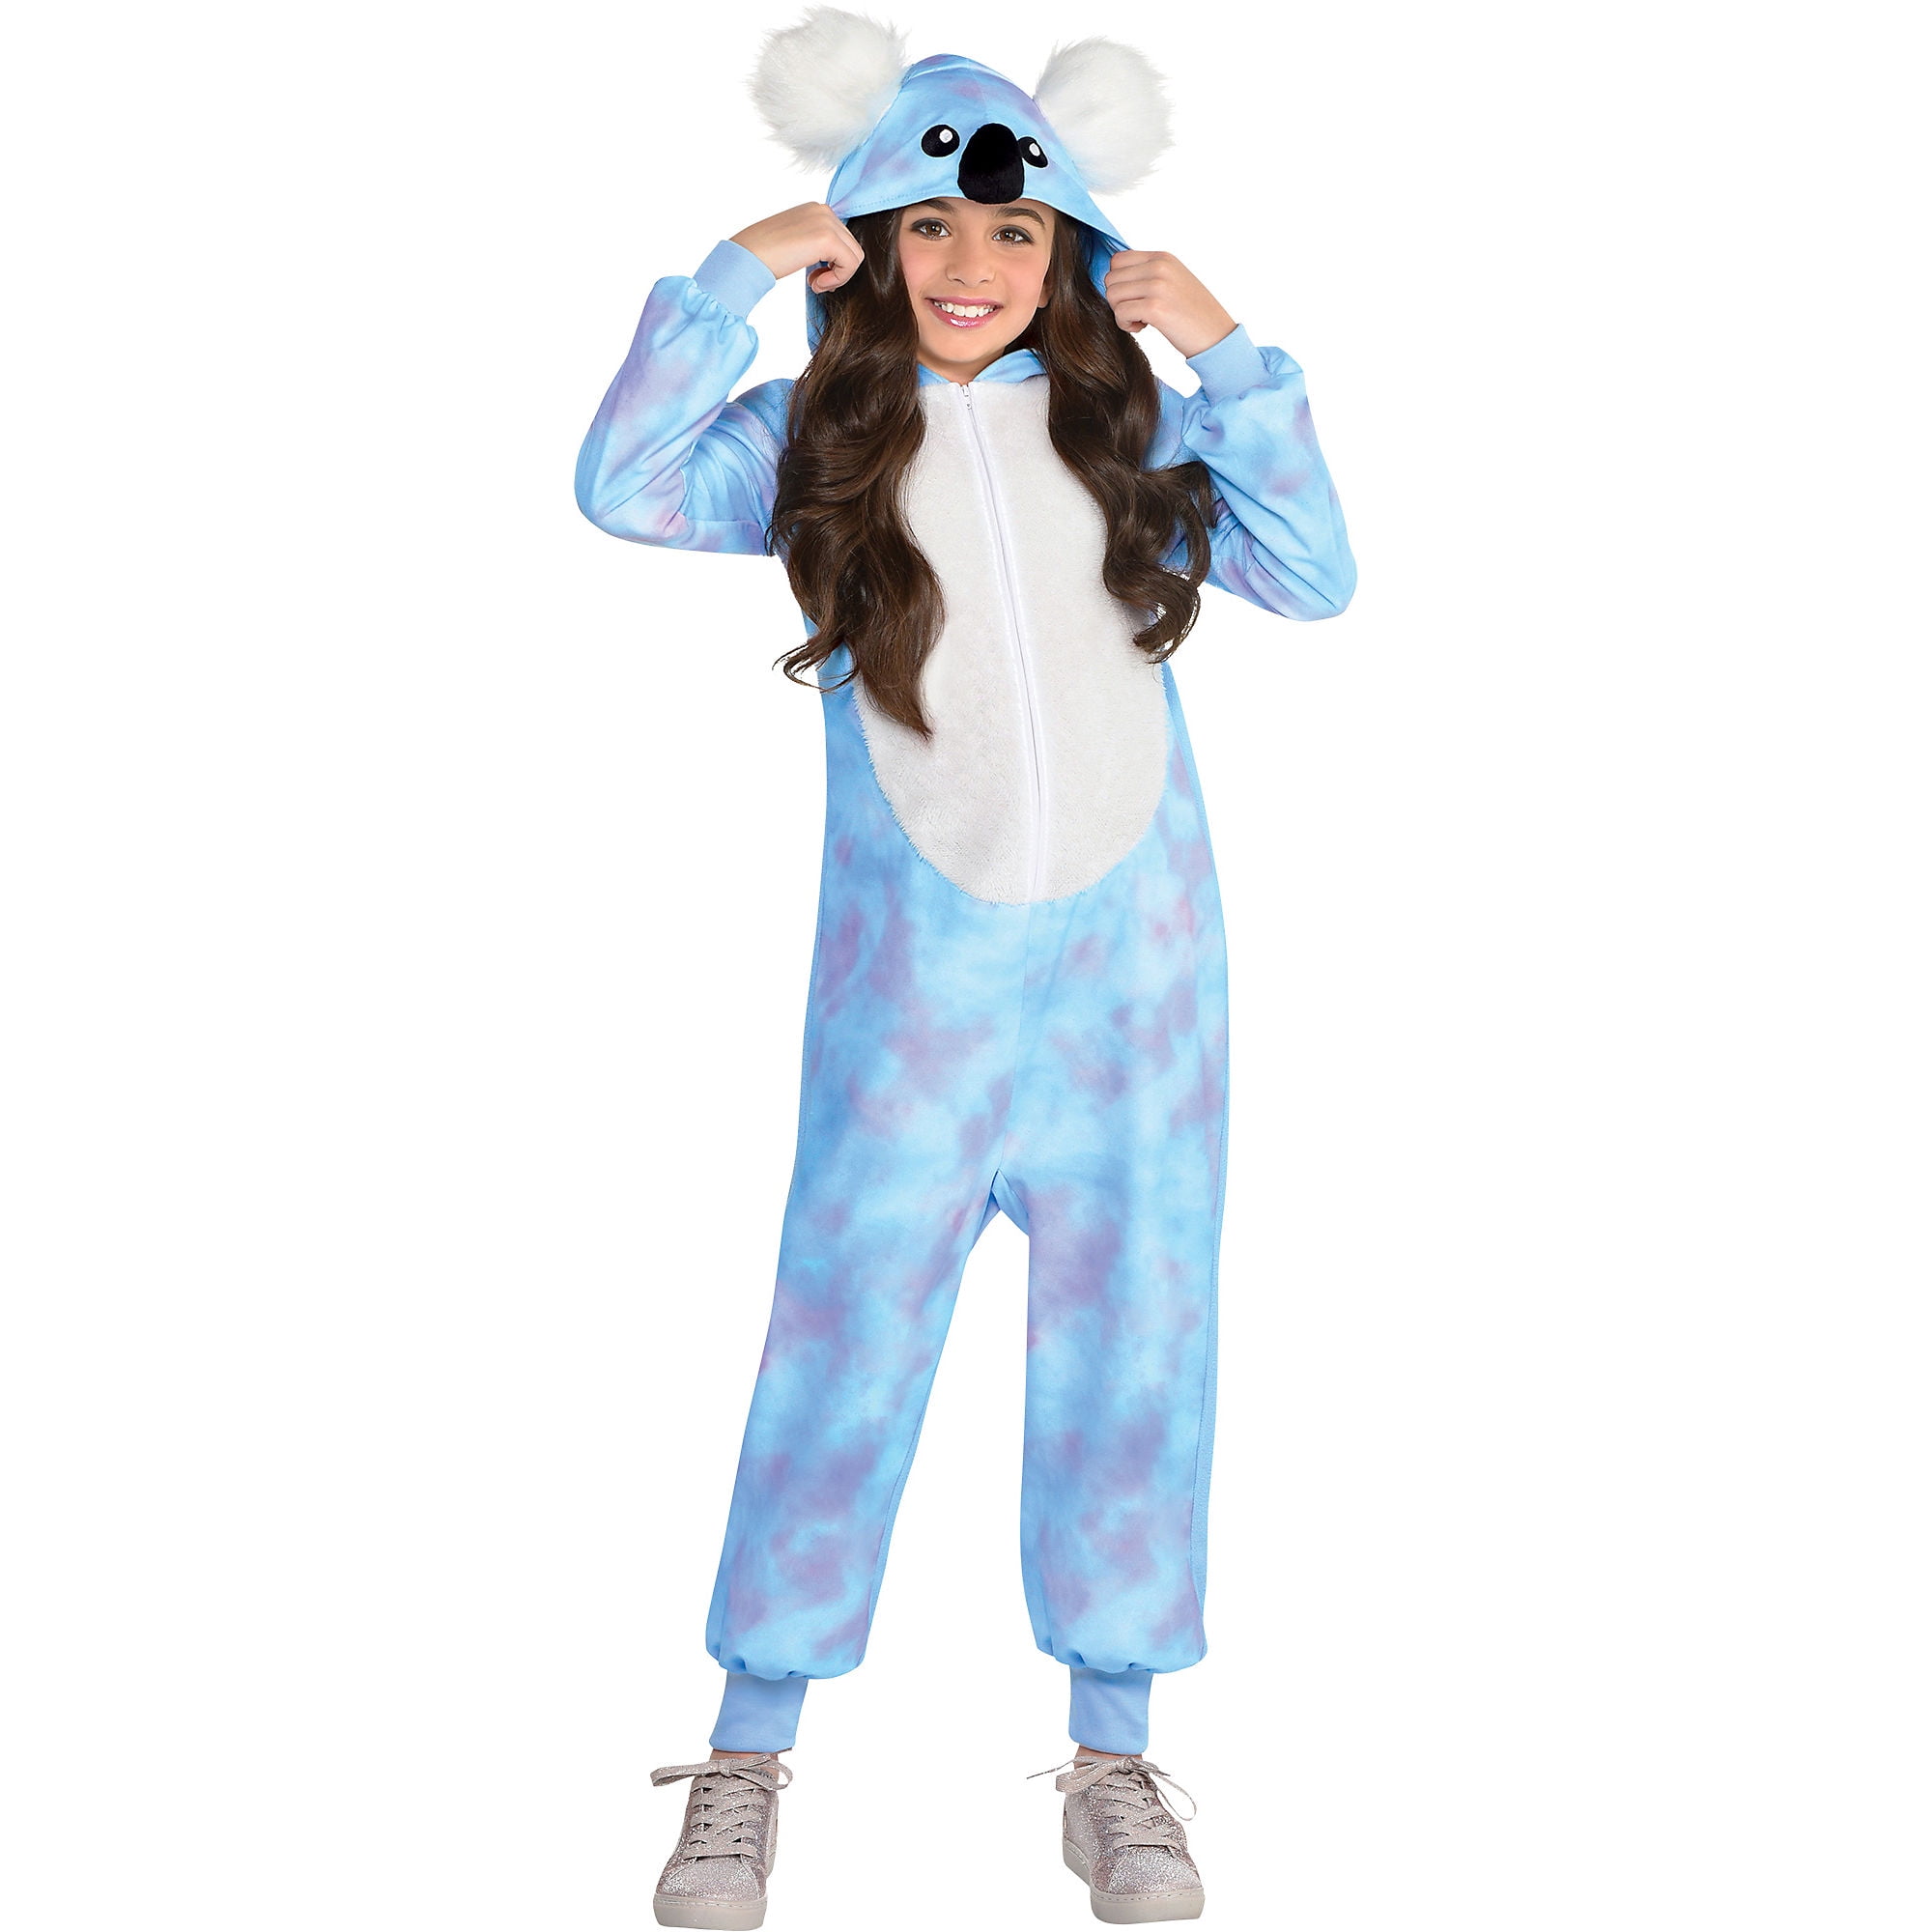 Soft Hooded Onesies Pajamas Costume Halloween Pajamas Gifts for Girls